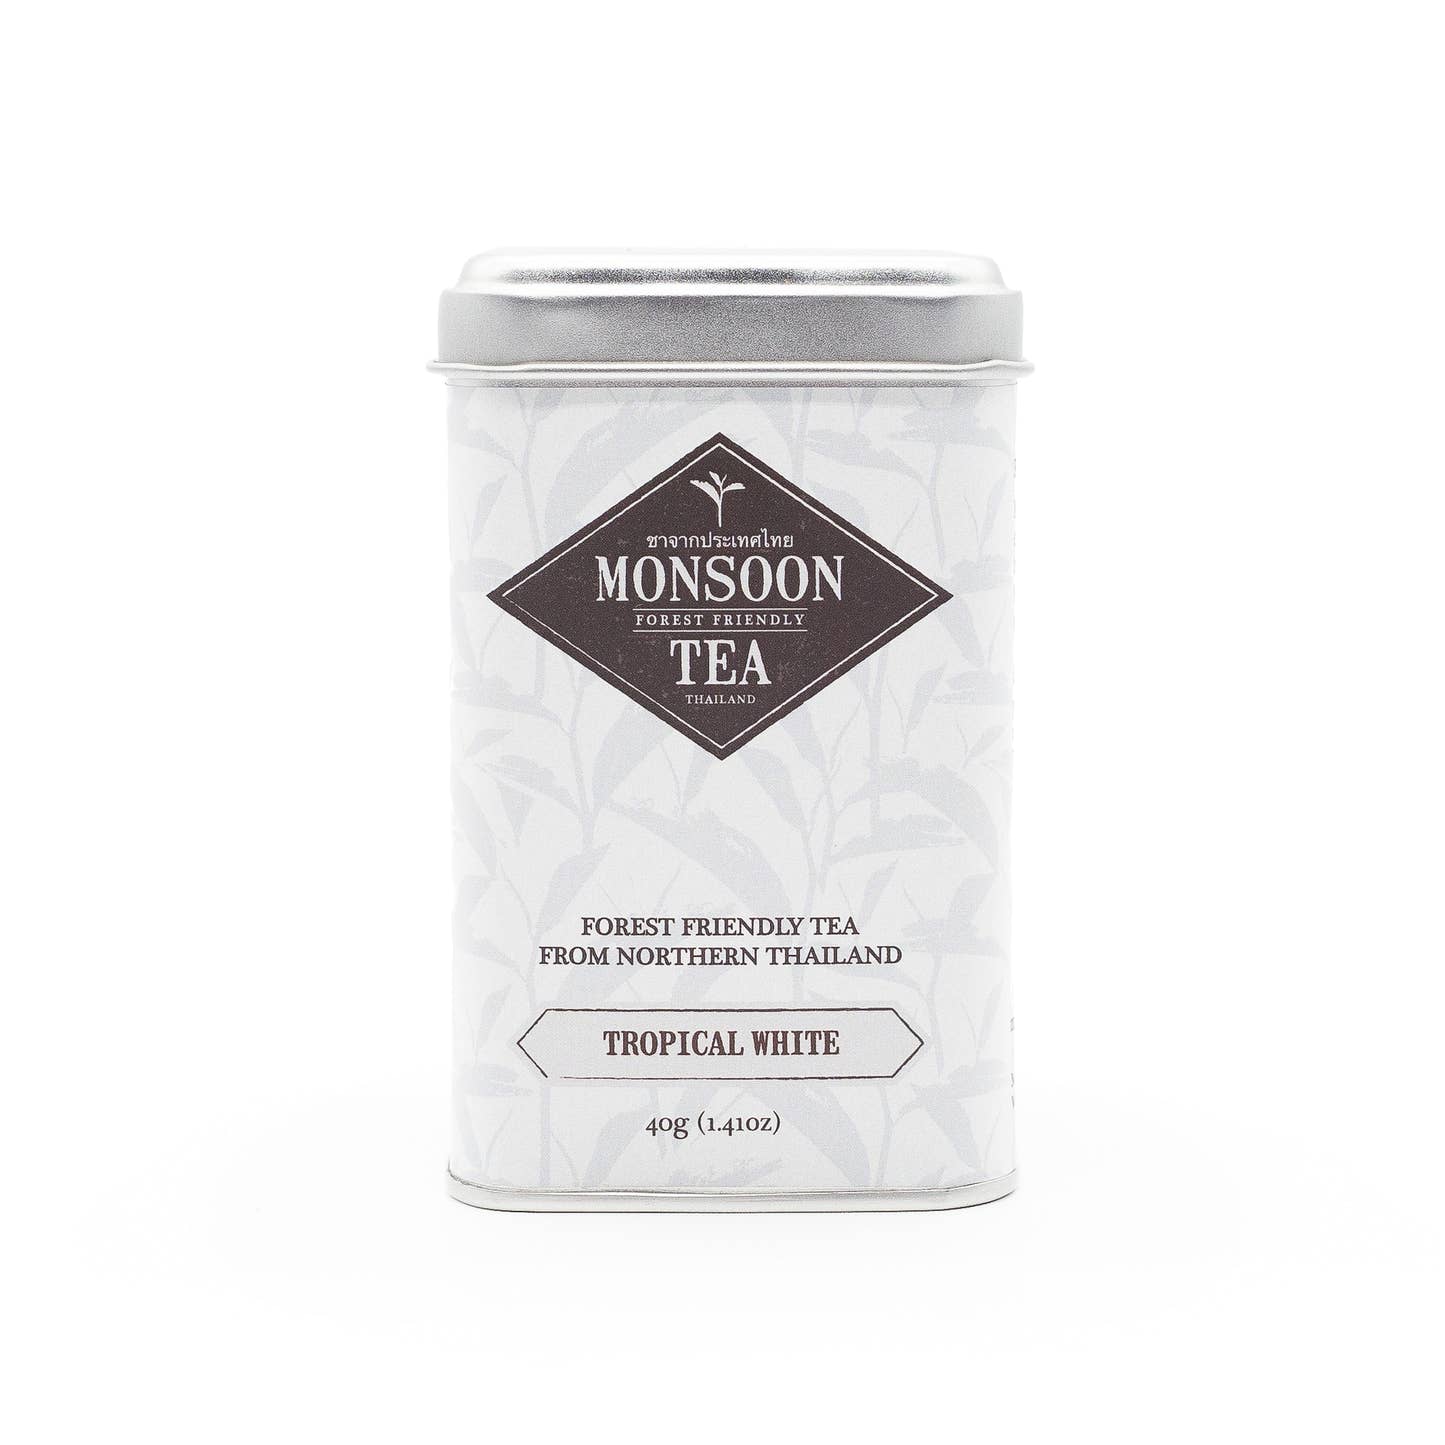 Tropical White loose leaf tea tin by Monsoon Tea